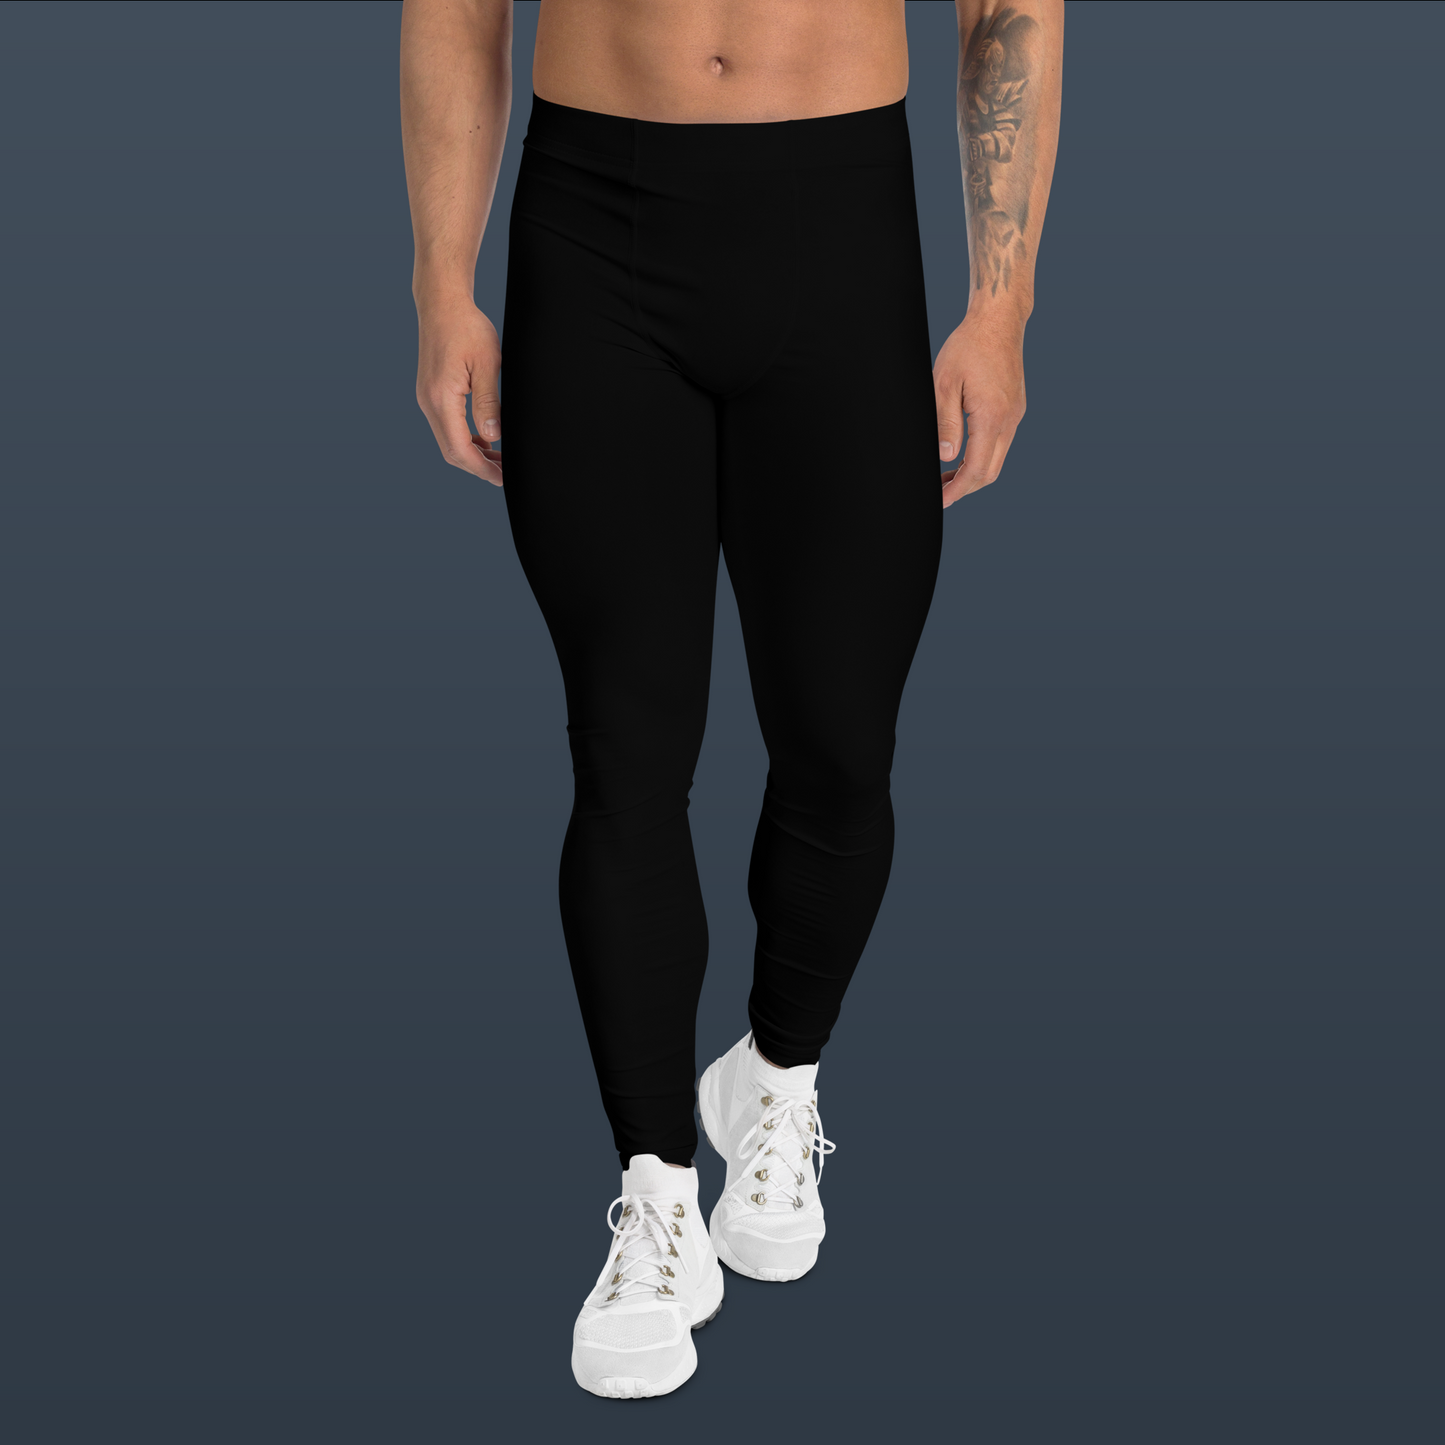 Men's Athletic Leggings (Black)